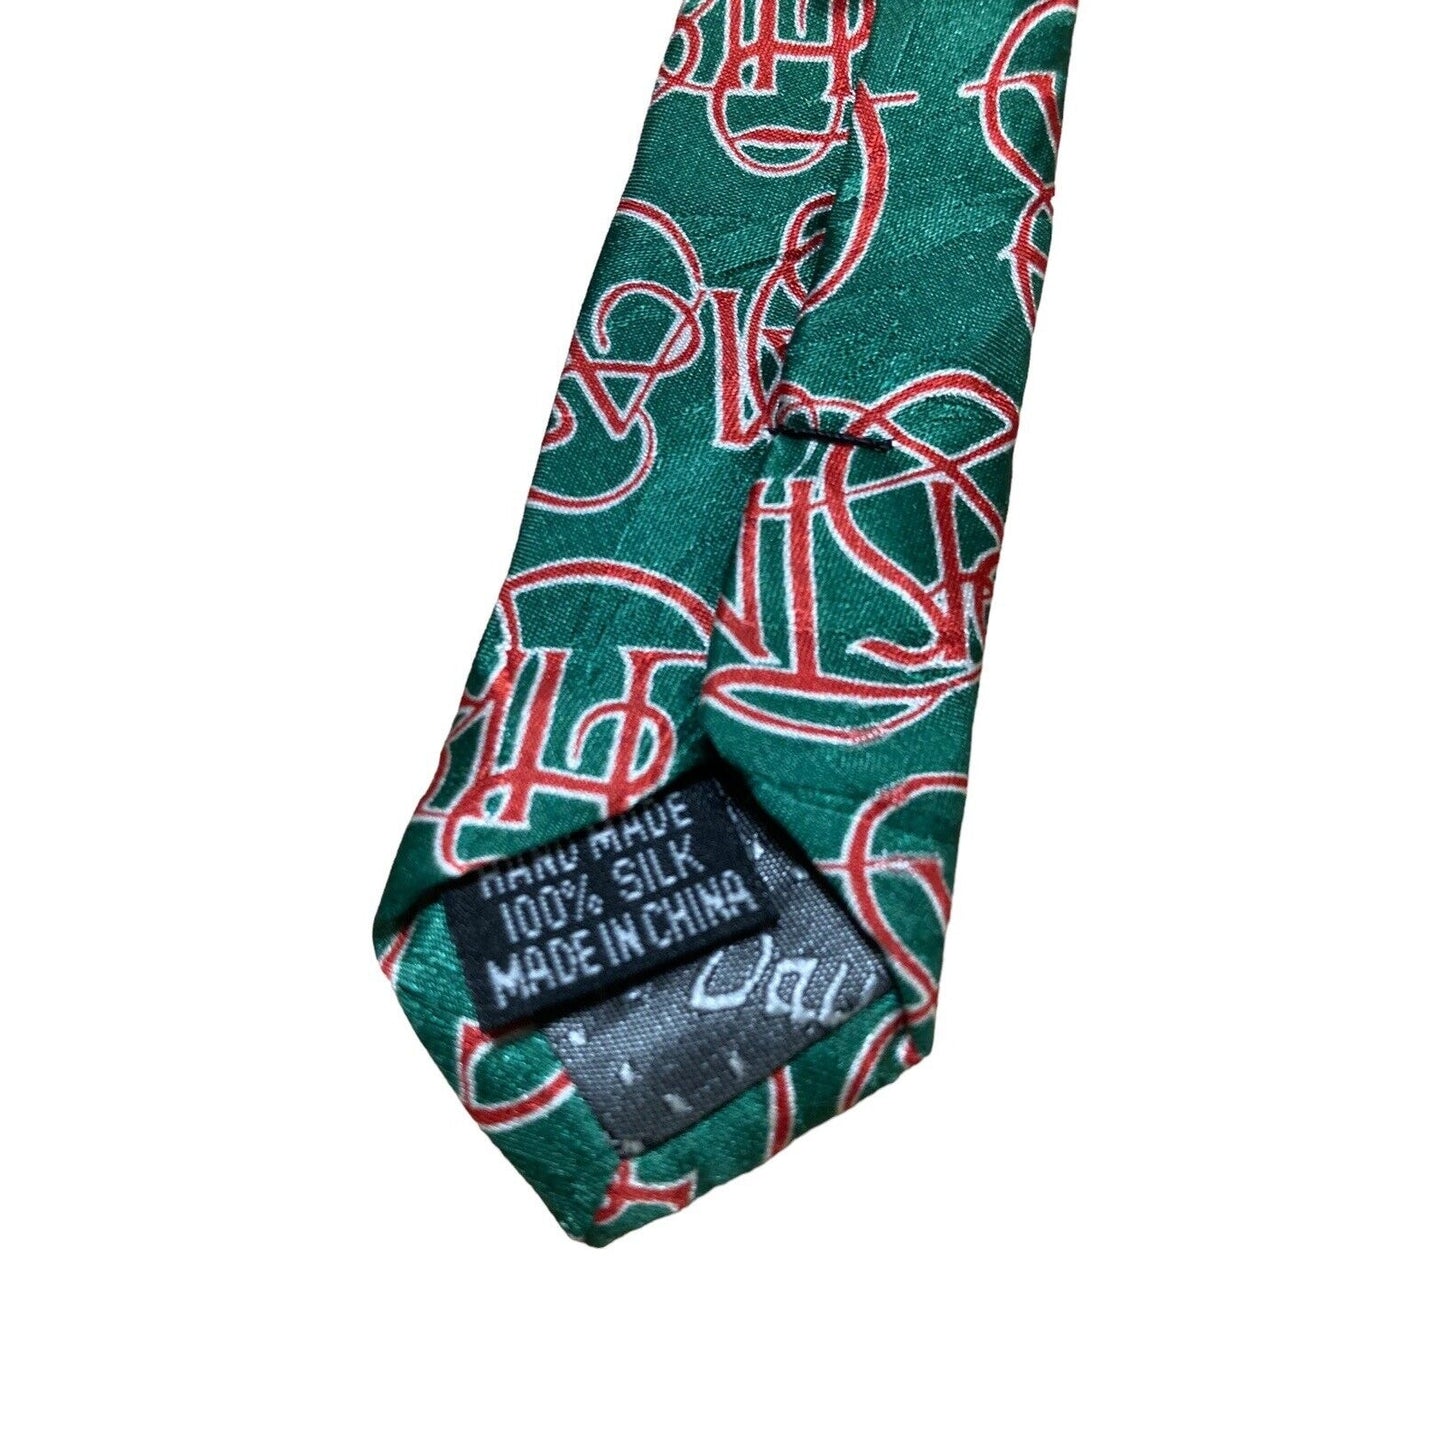 Keith Daniels Christmas Cursive Holiday Vintage Novelty Necktie 100% Silk